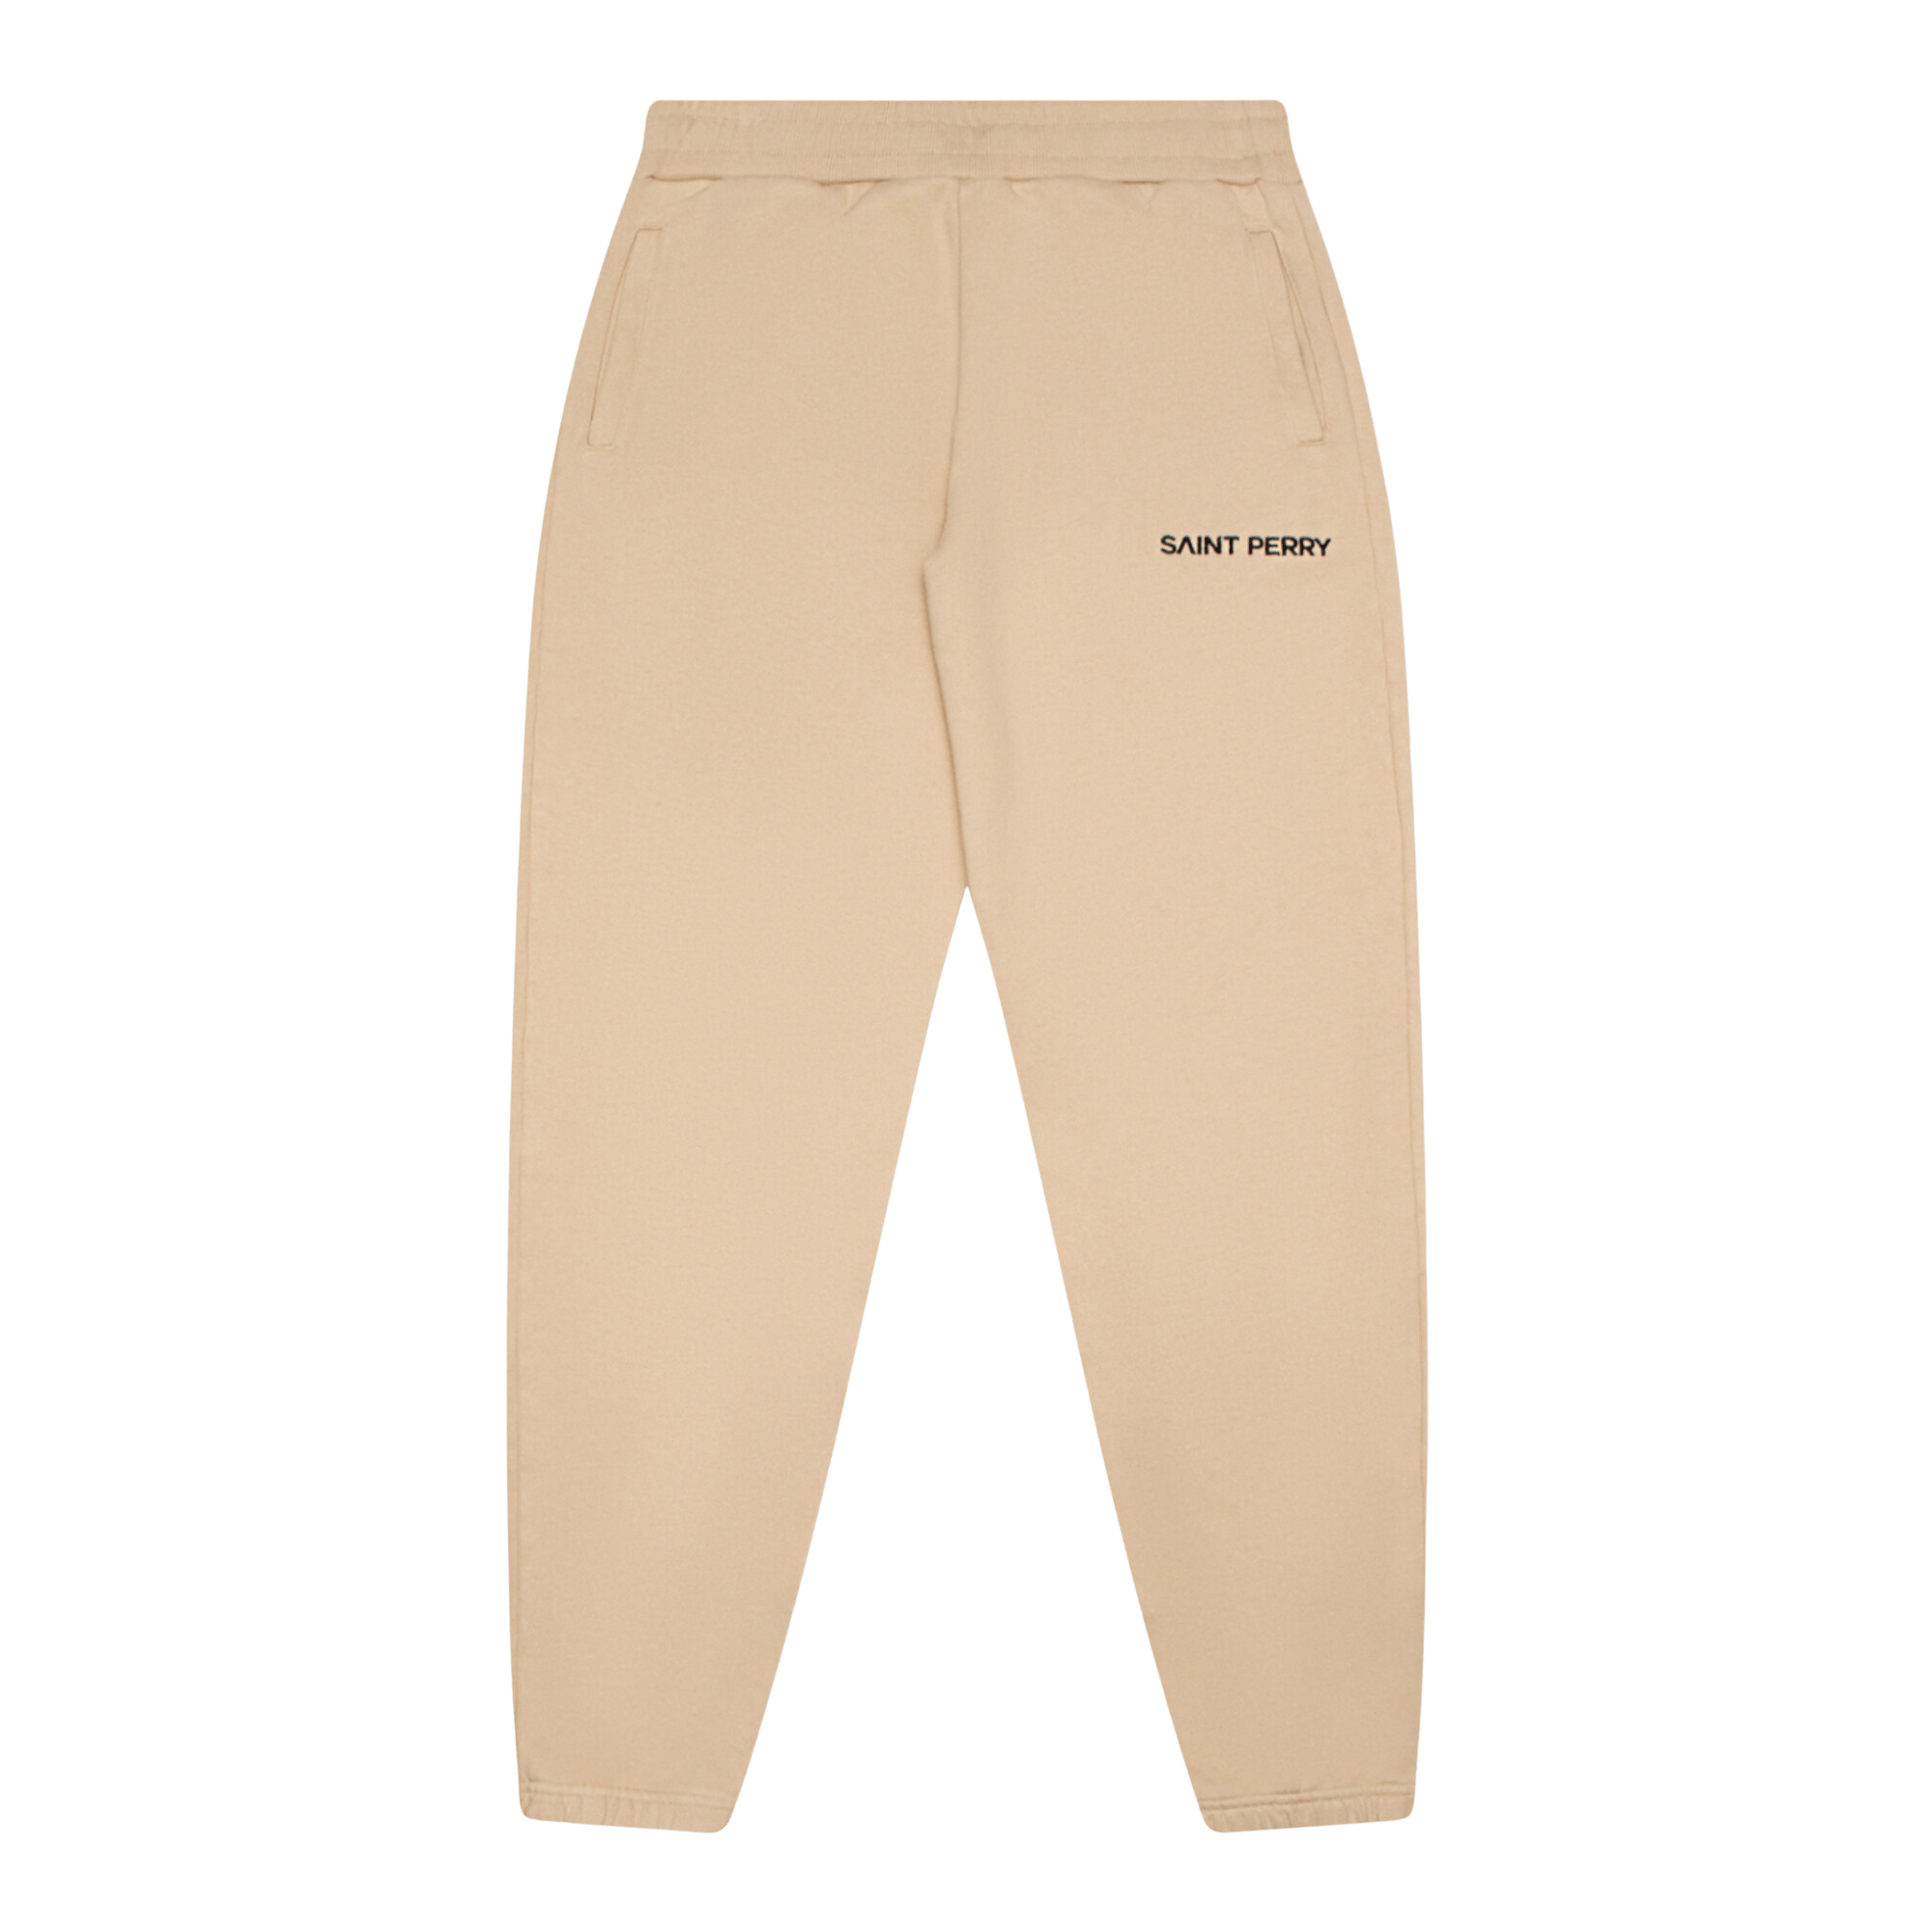 Saint Perry Men's Brown Cotton Sweatpant - Beige In Neutral